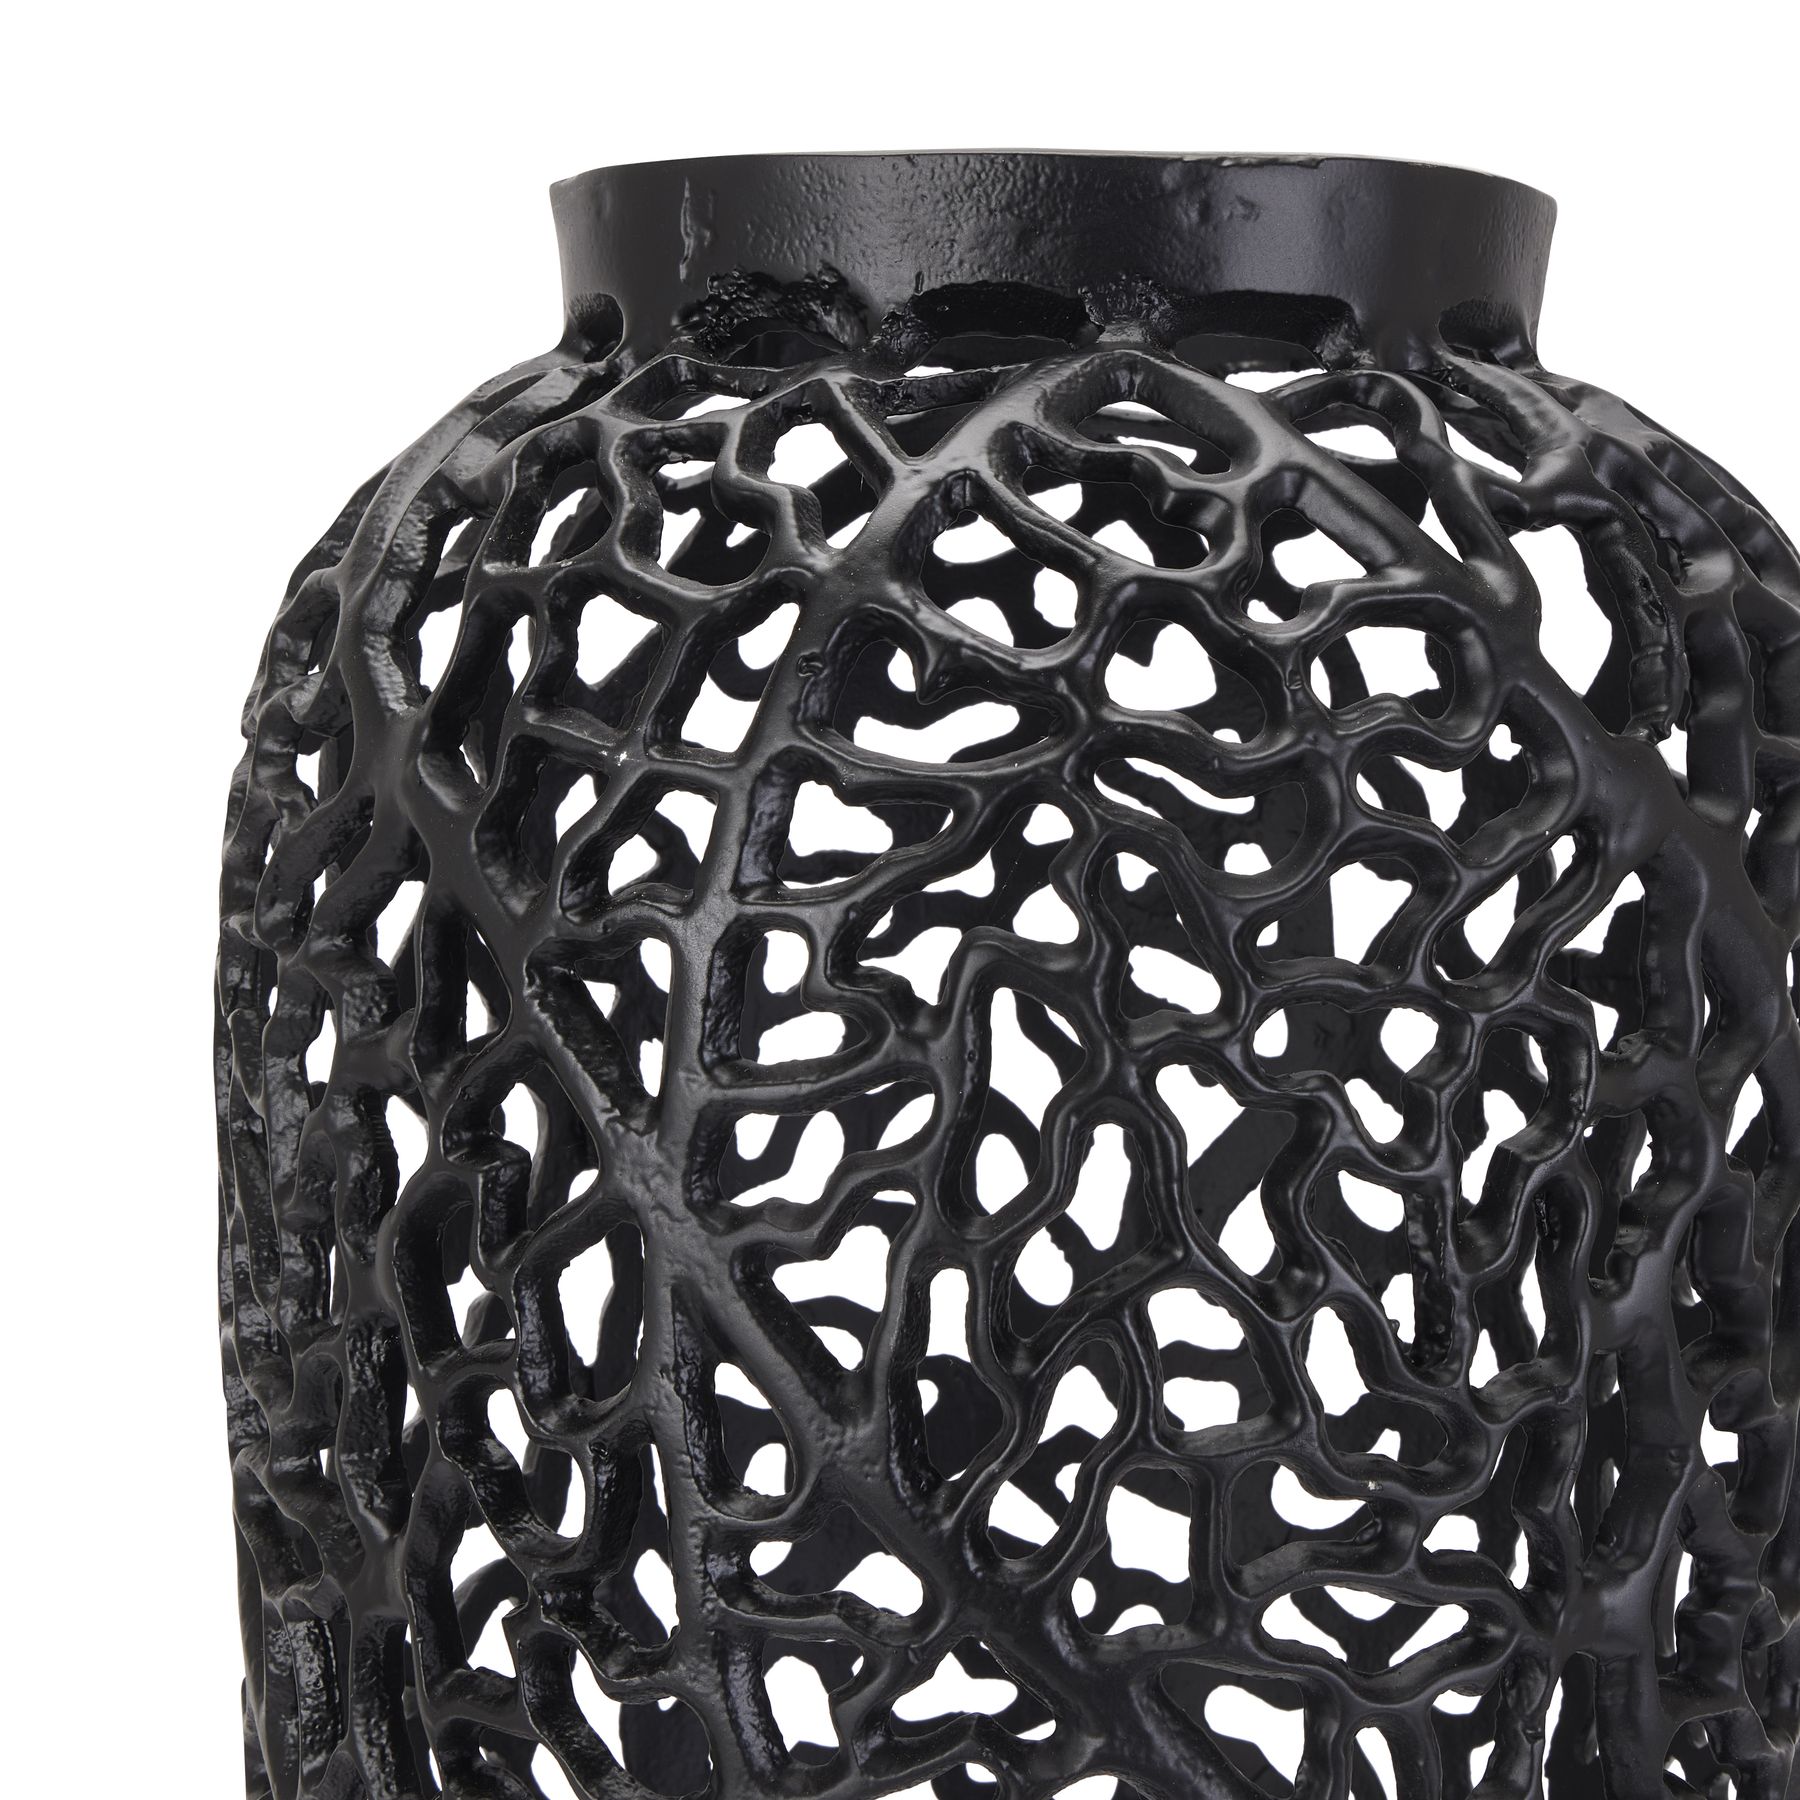 Black Cast Lattice Large Vase - Image 2